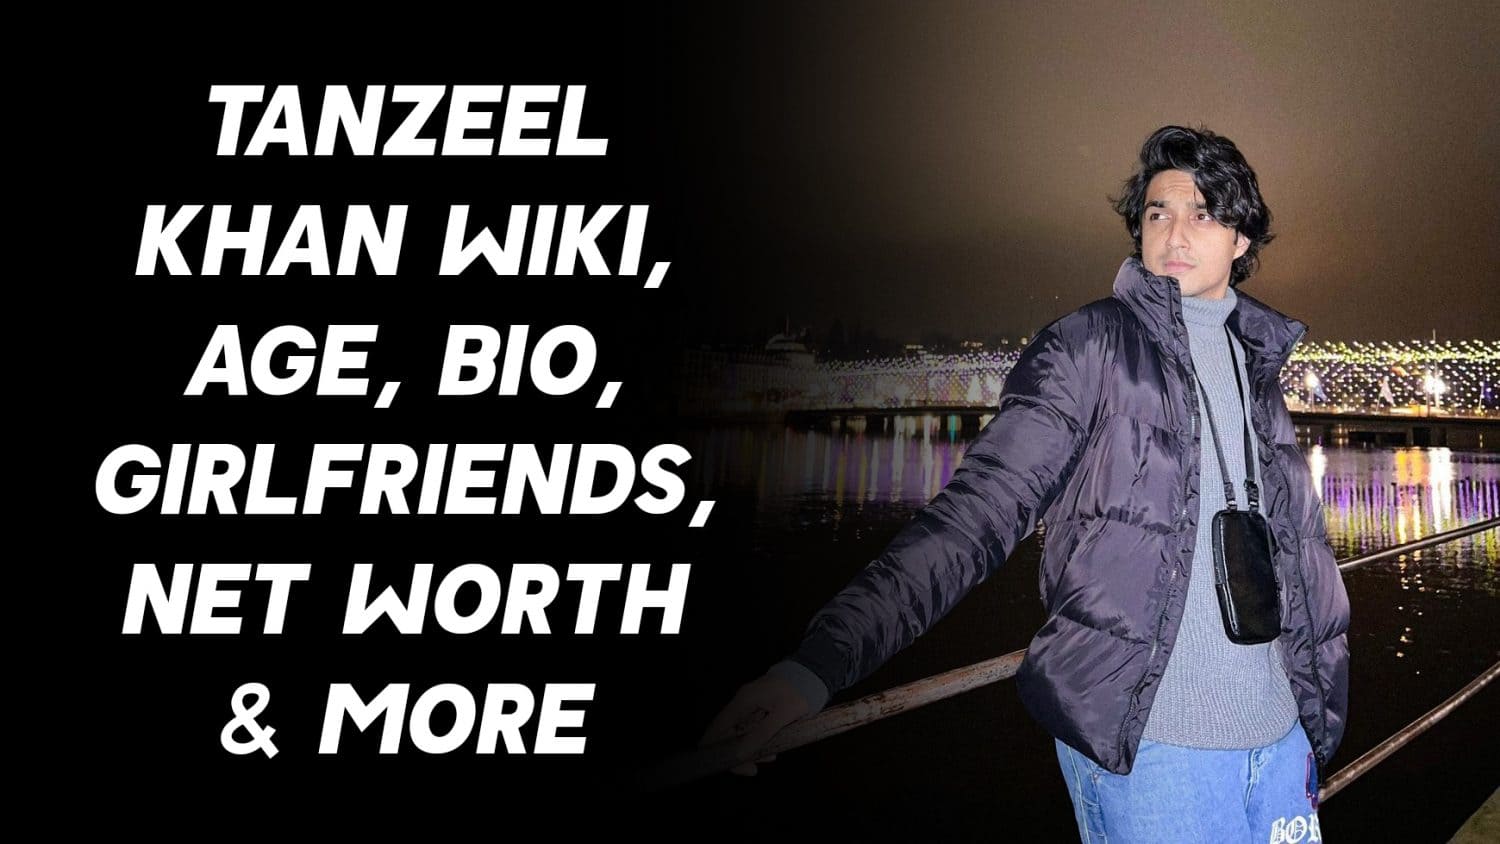 Tanzeel Khan Wiki, Age, Bio, Girlfriends, Net Worth & More 1